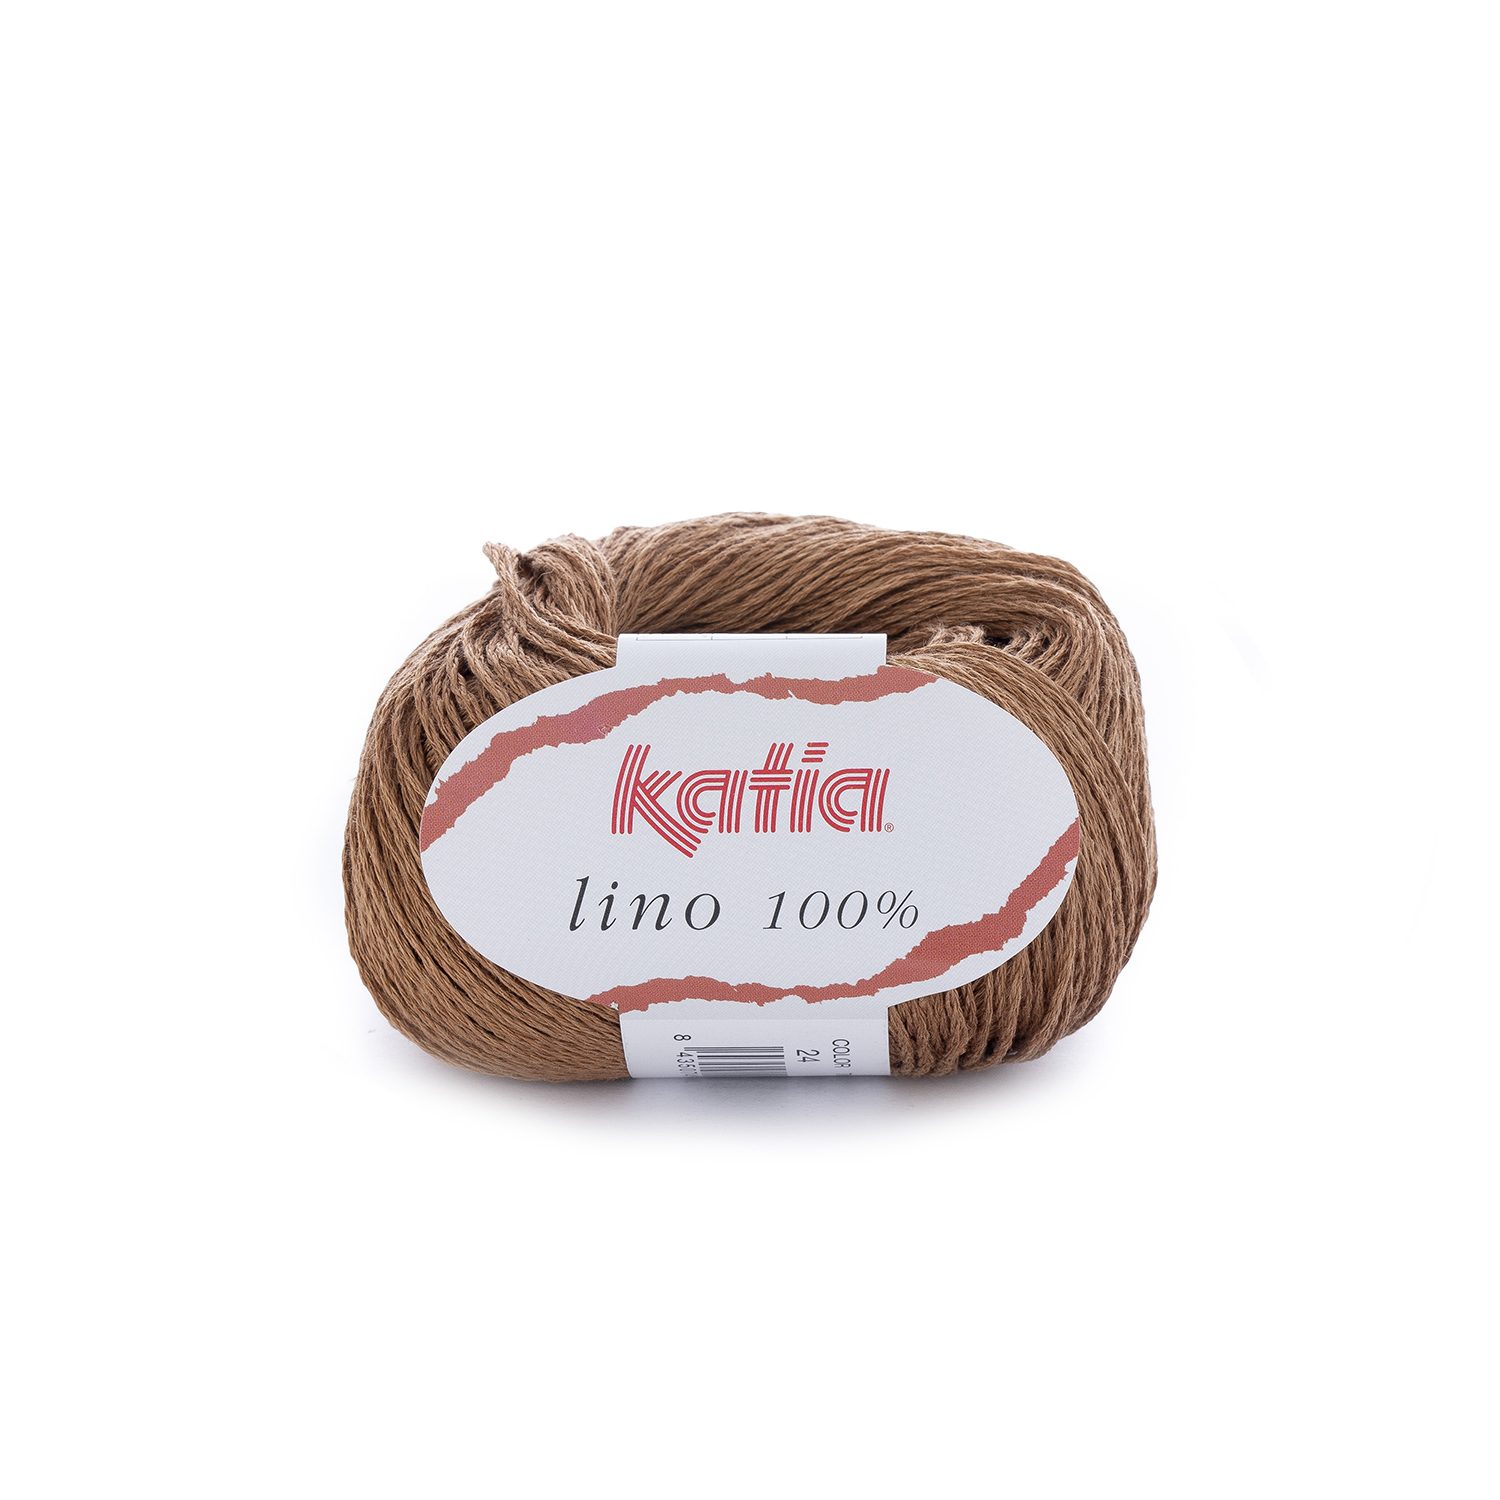 yarn-wool-lino100-knit-linen-brown-spring-summer-katia-24-g